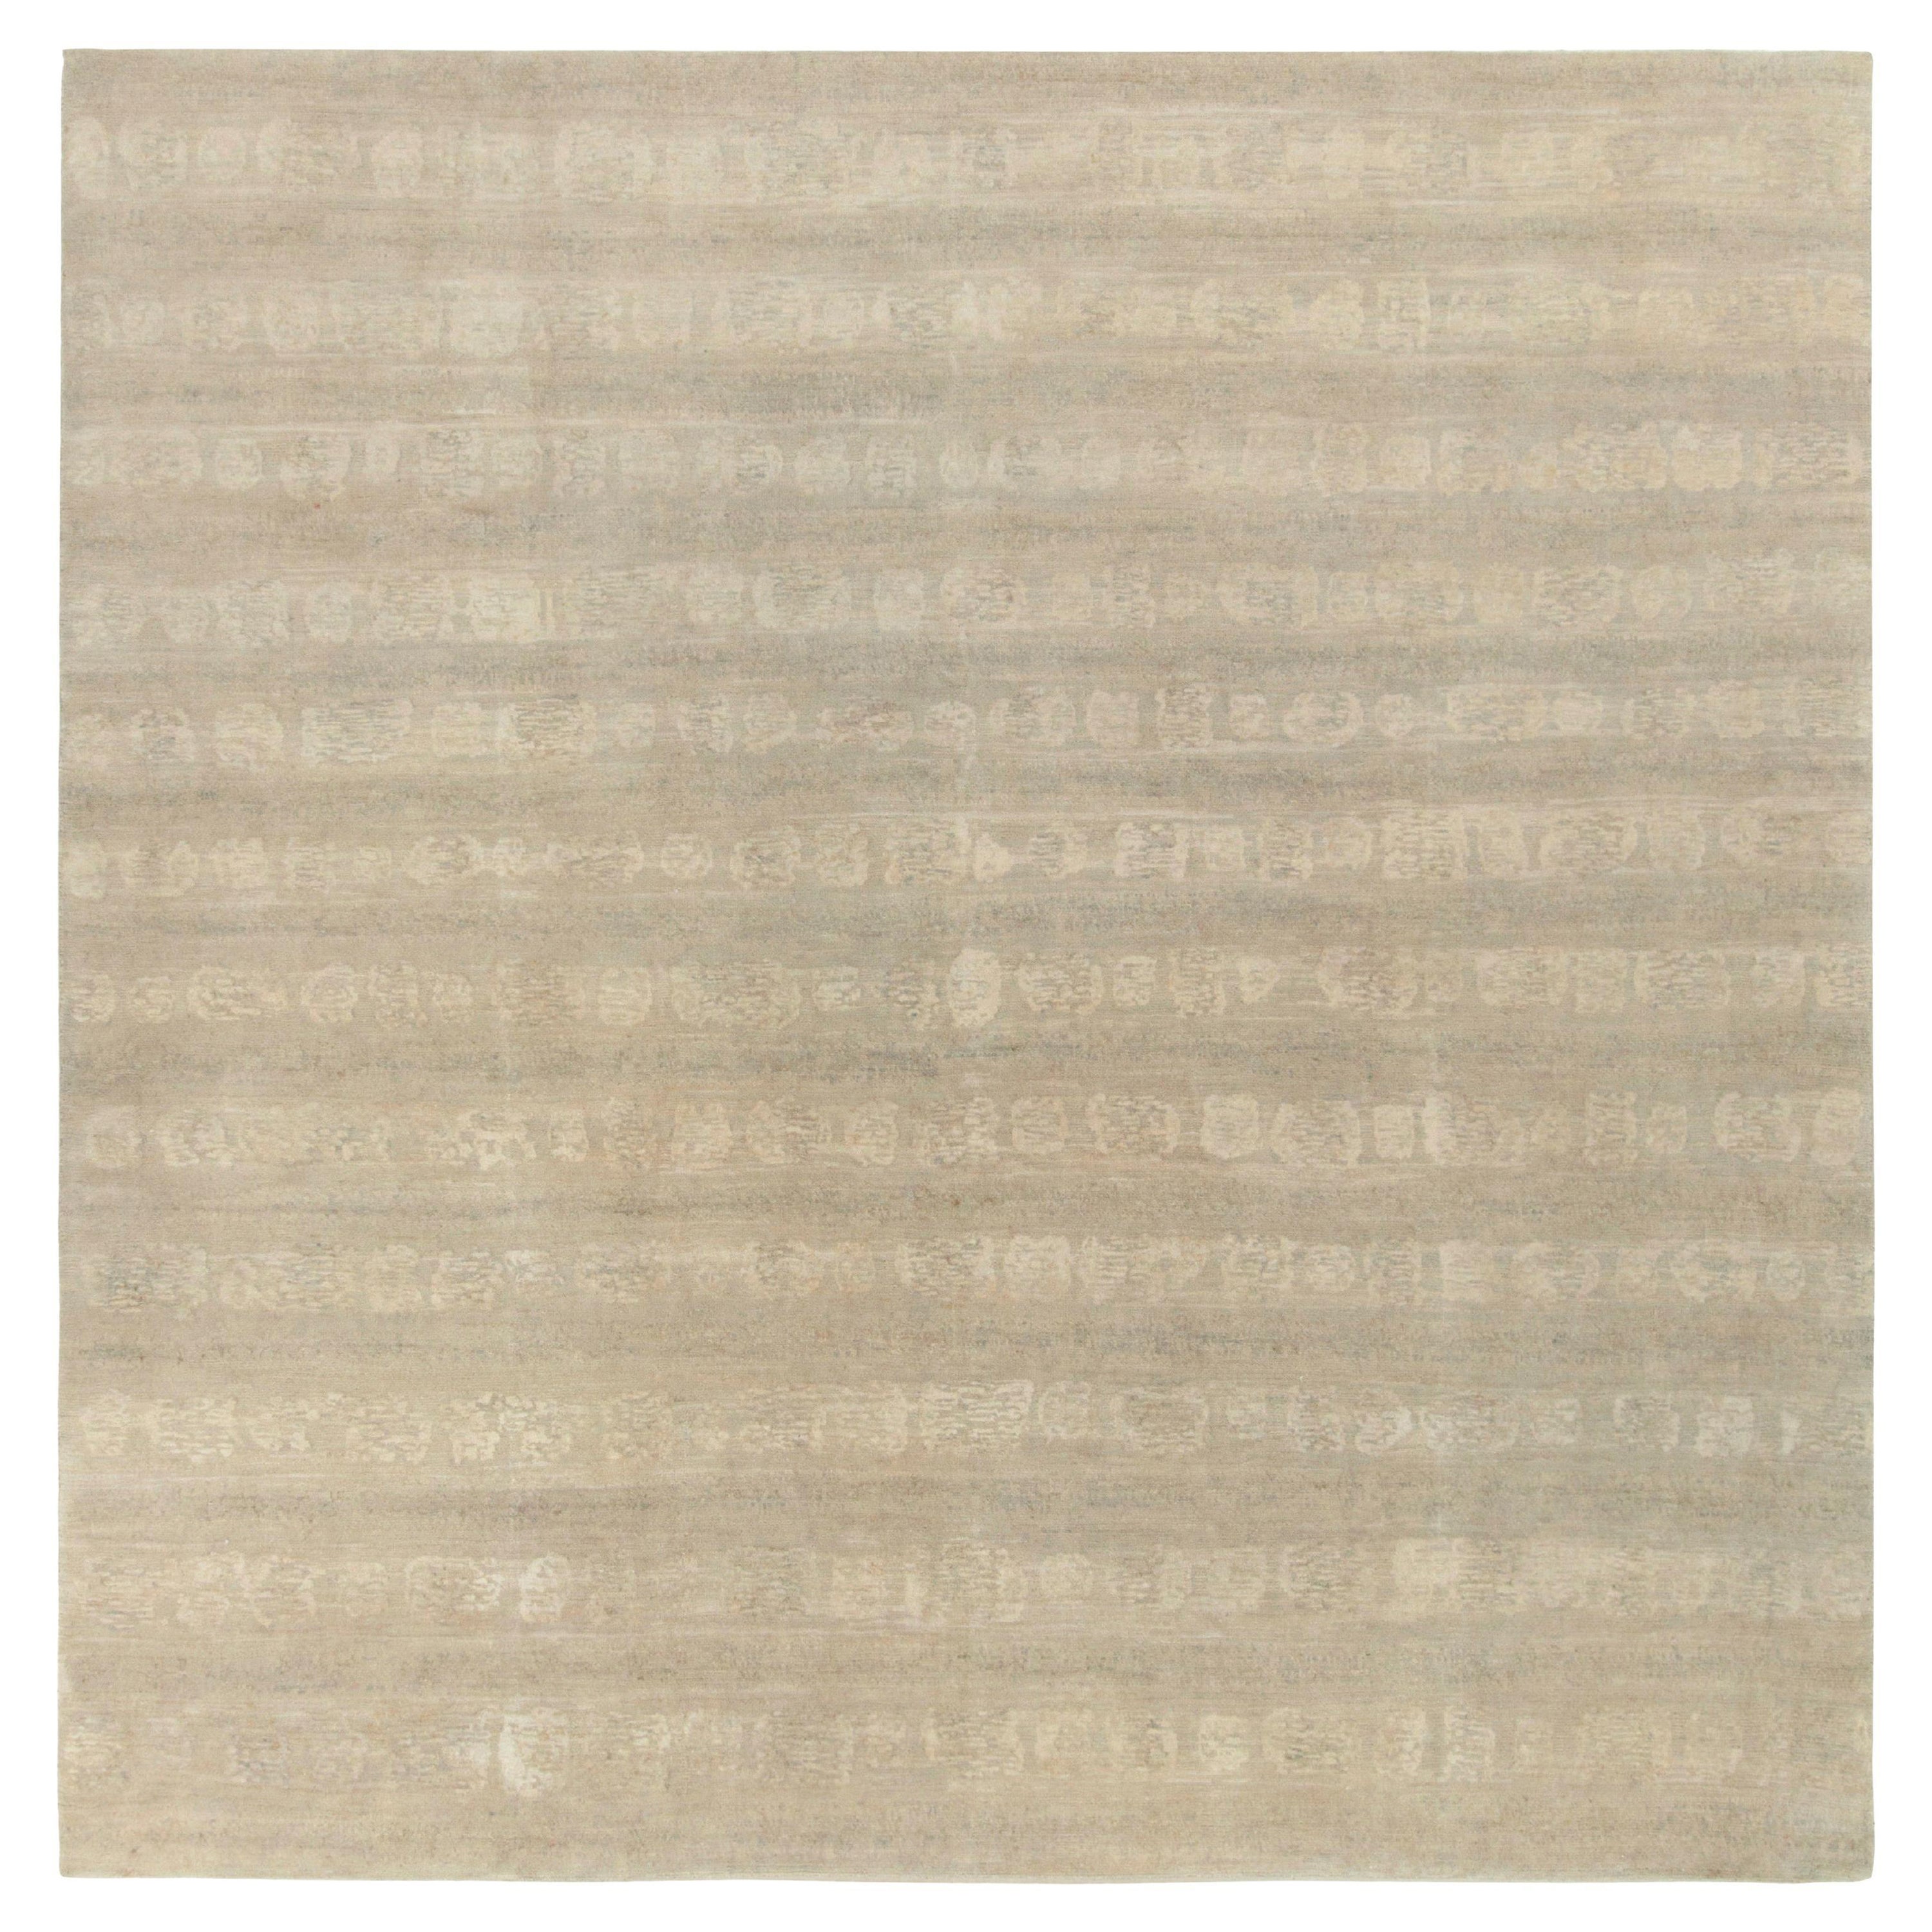 Rug & Kilim's Contemporary Rug in Beige & Grey Muted Stripes (tapis contemporain à rayures sourdes beige et grises)